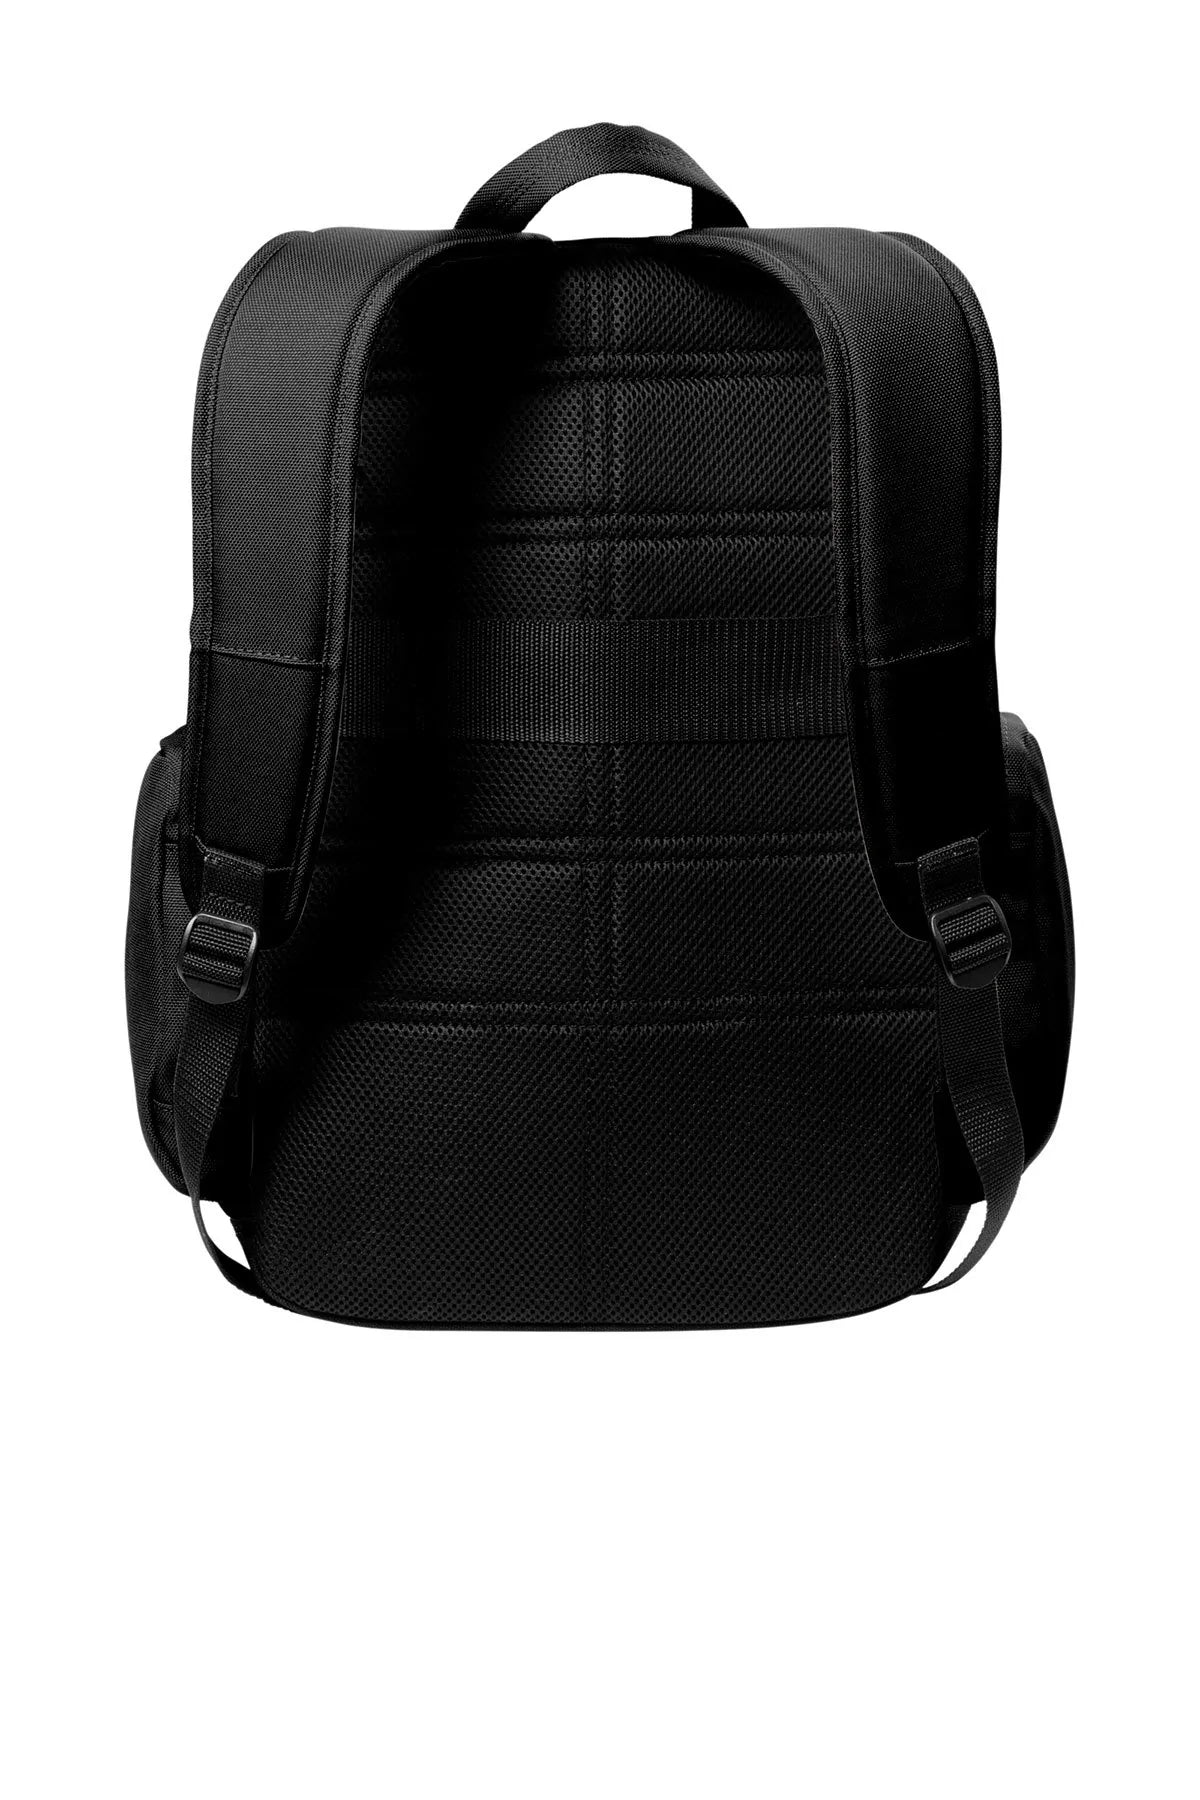 Carhartt Foundry Series Pro Custom Backpacks, Black